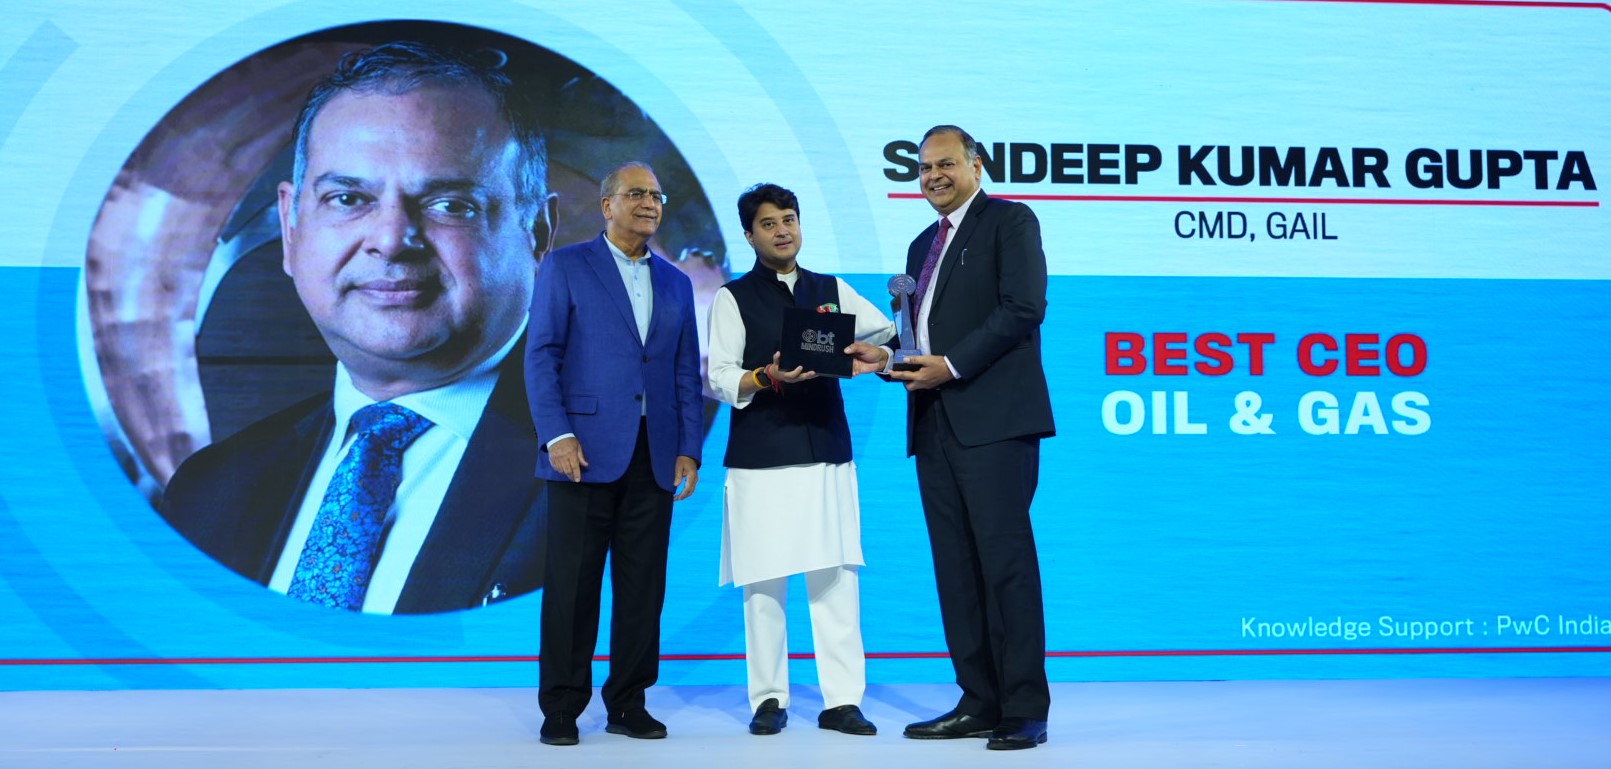 GAIL CMD Shri Sandeep Kumar Gupta receives ‘Best CEO’ award for Oil & Gas sector